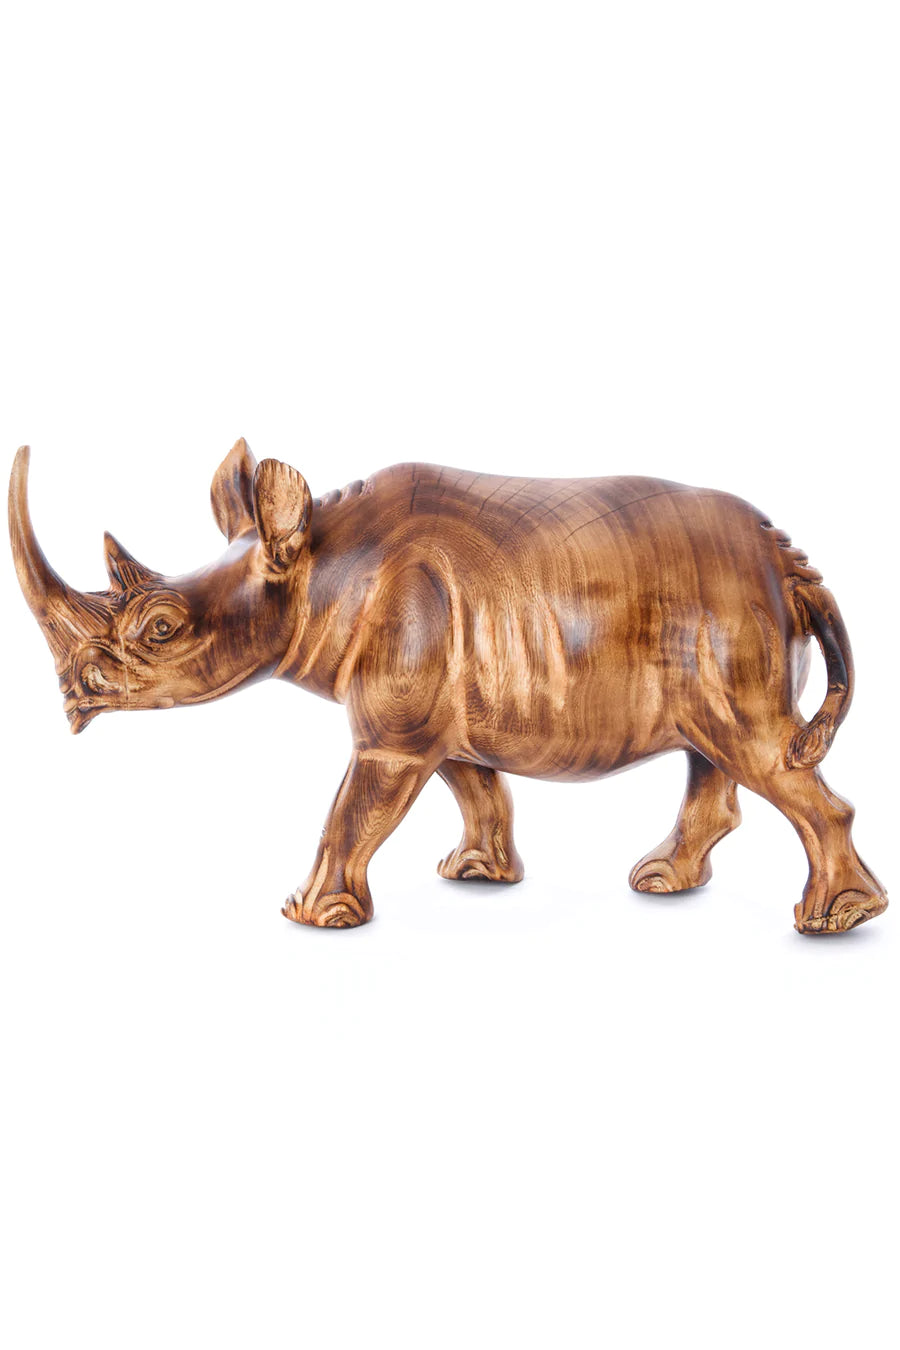 Jacaranda Rhino Sculpture